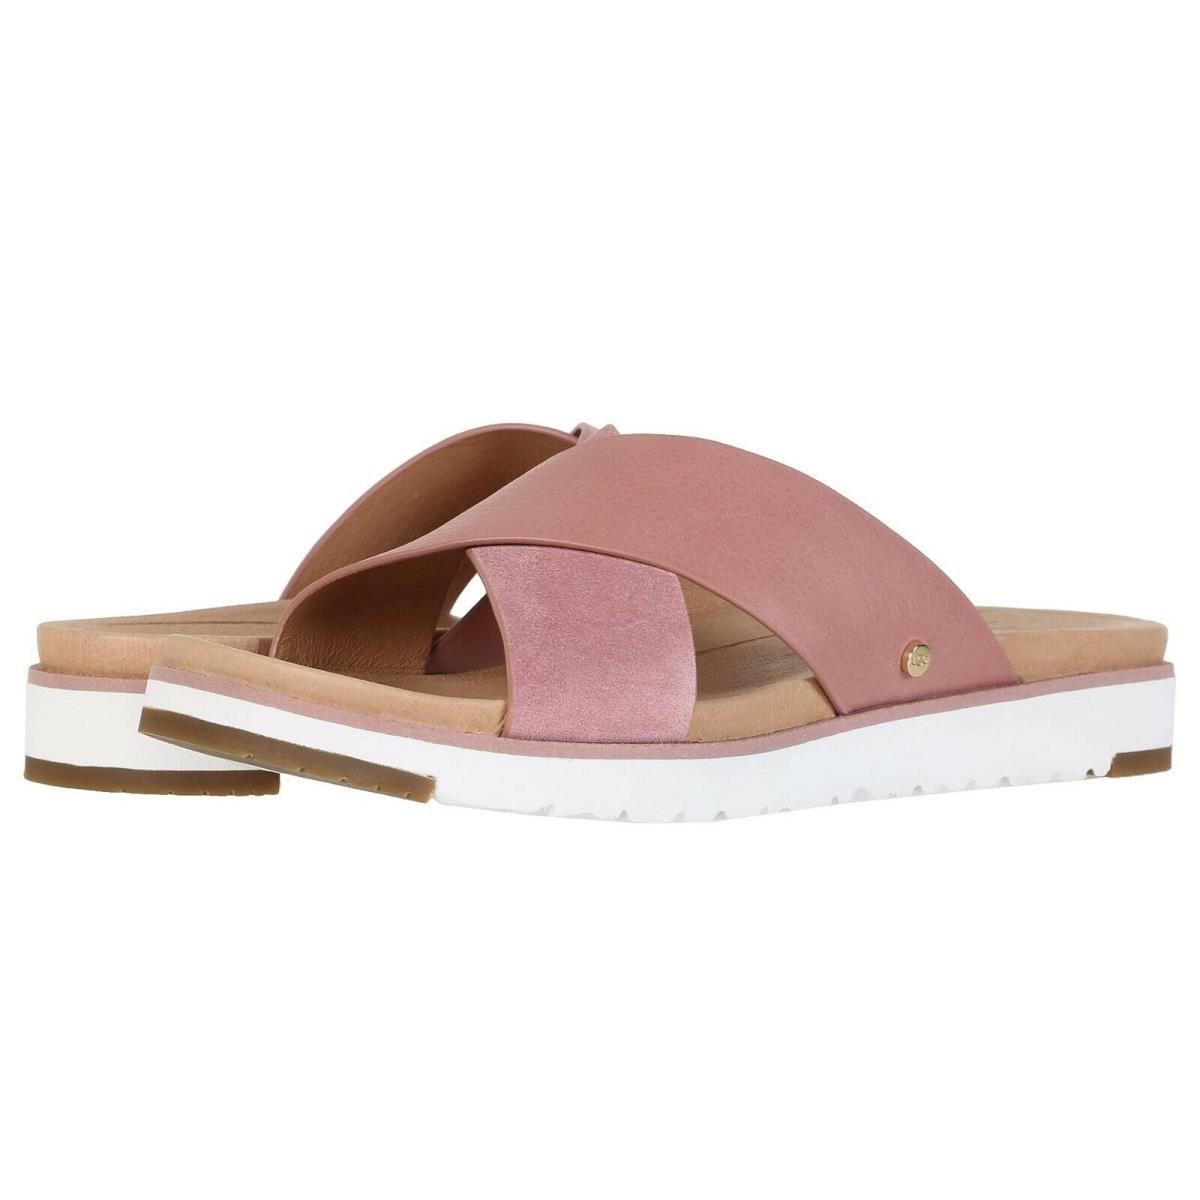 Ugg Brand Womens Pink Dawn Kari Criss Cross Strap Sandals Shoes Slippers